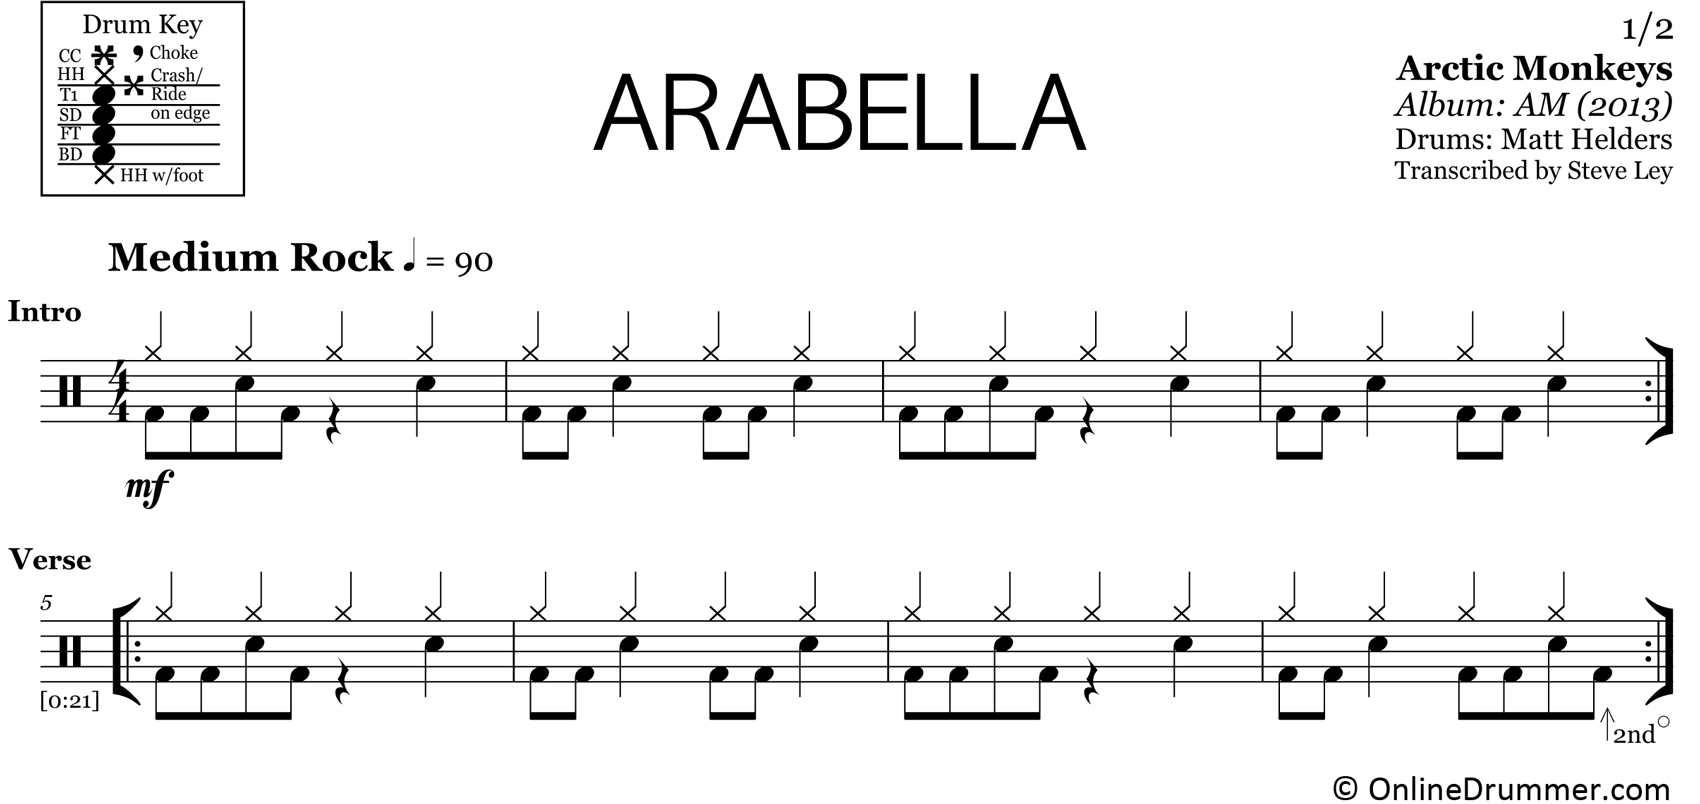 Arabella - Arctic Monkeys - Drum Sheet Music